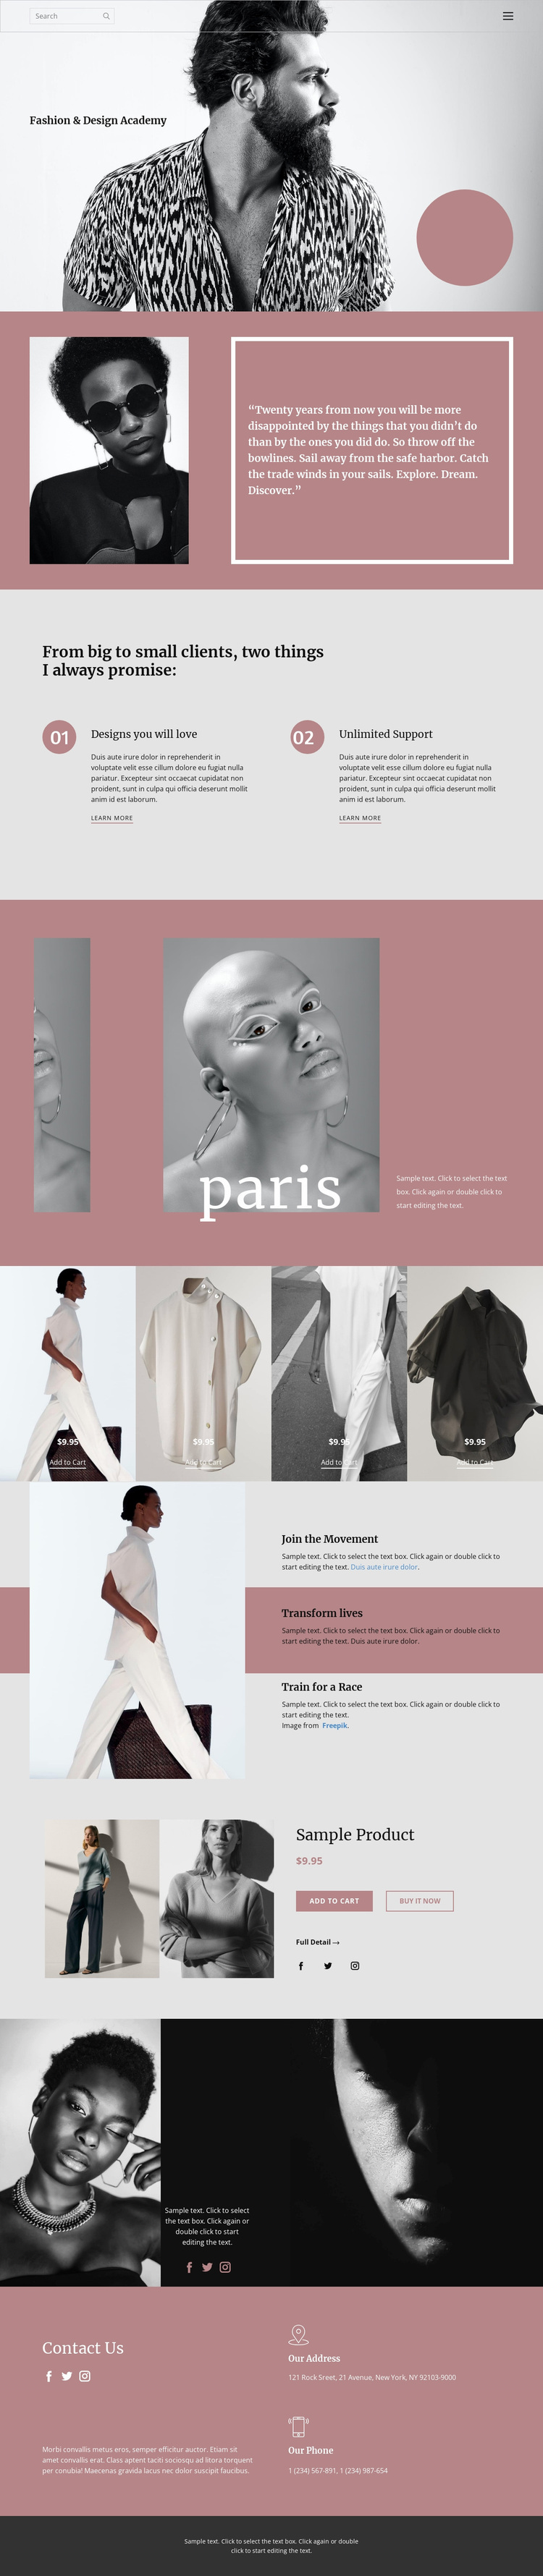 Fashion studio Website Design